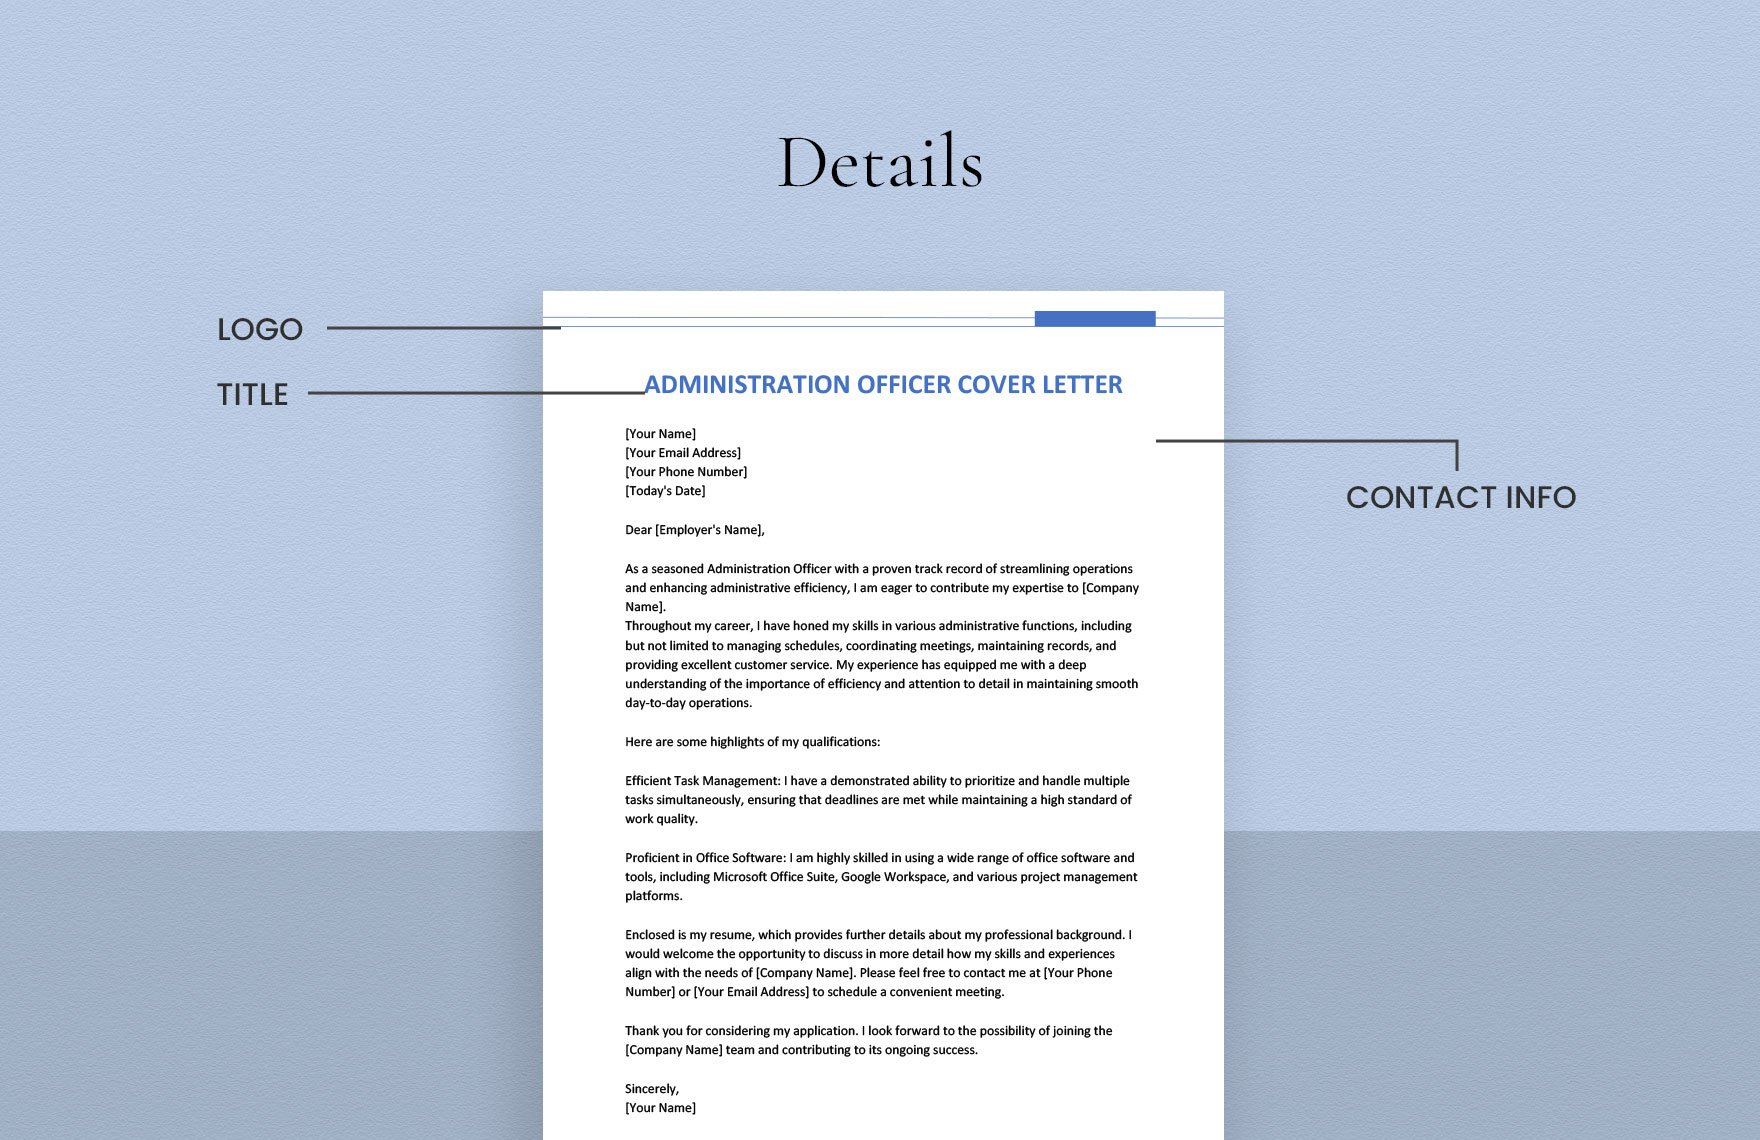 Administration Officer Cover Letter